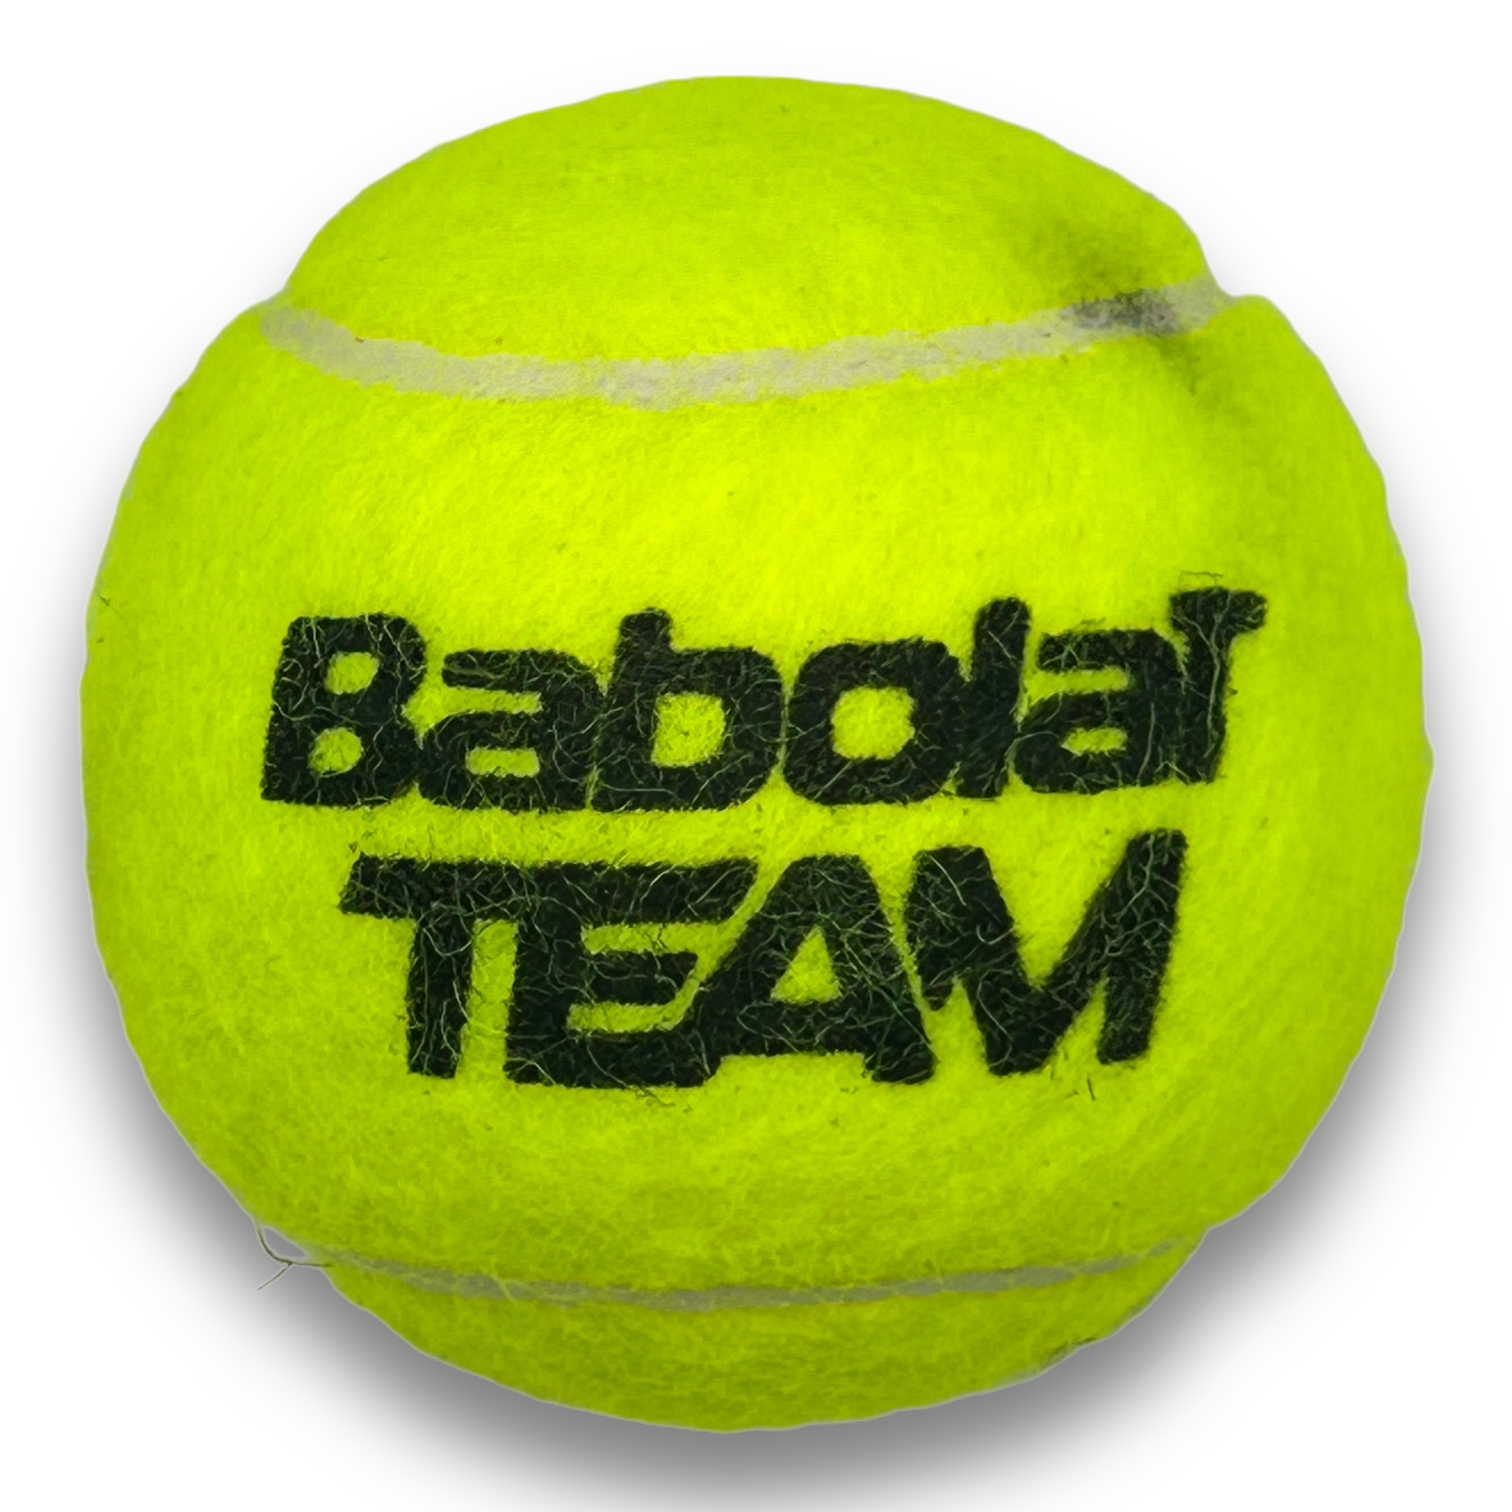 BEN SHELTON SIGNED TEAM BABOLAT TENNIS BALL (AFTAL COA)